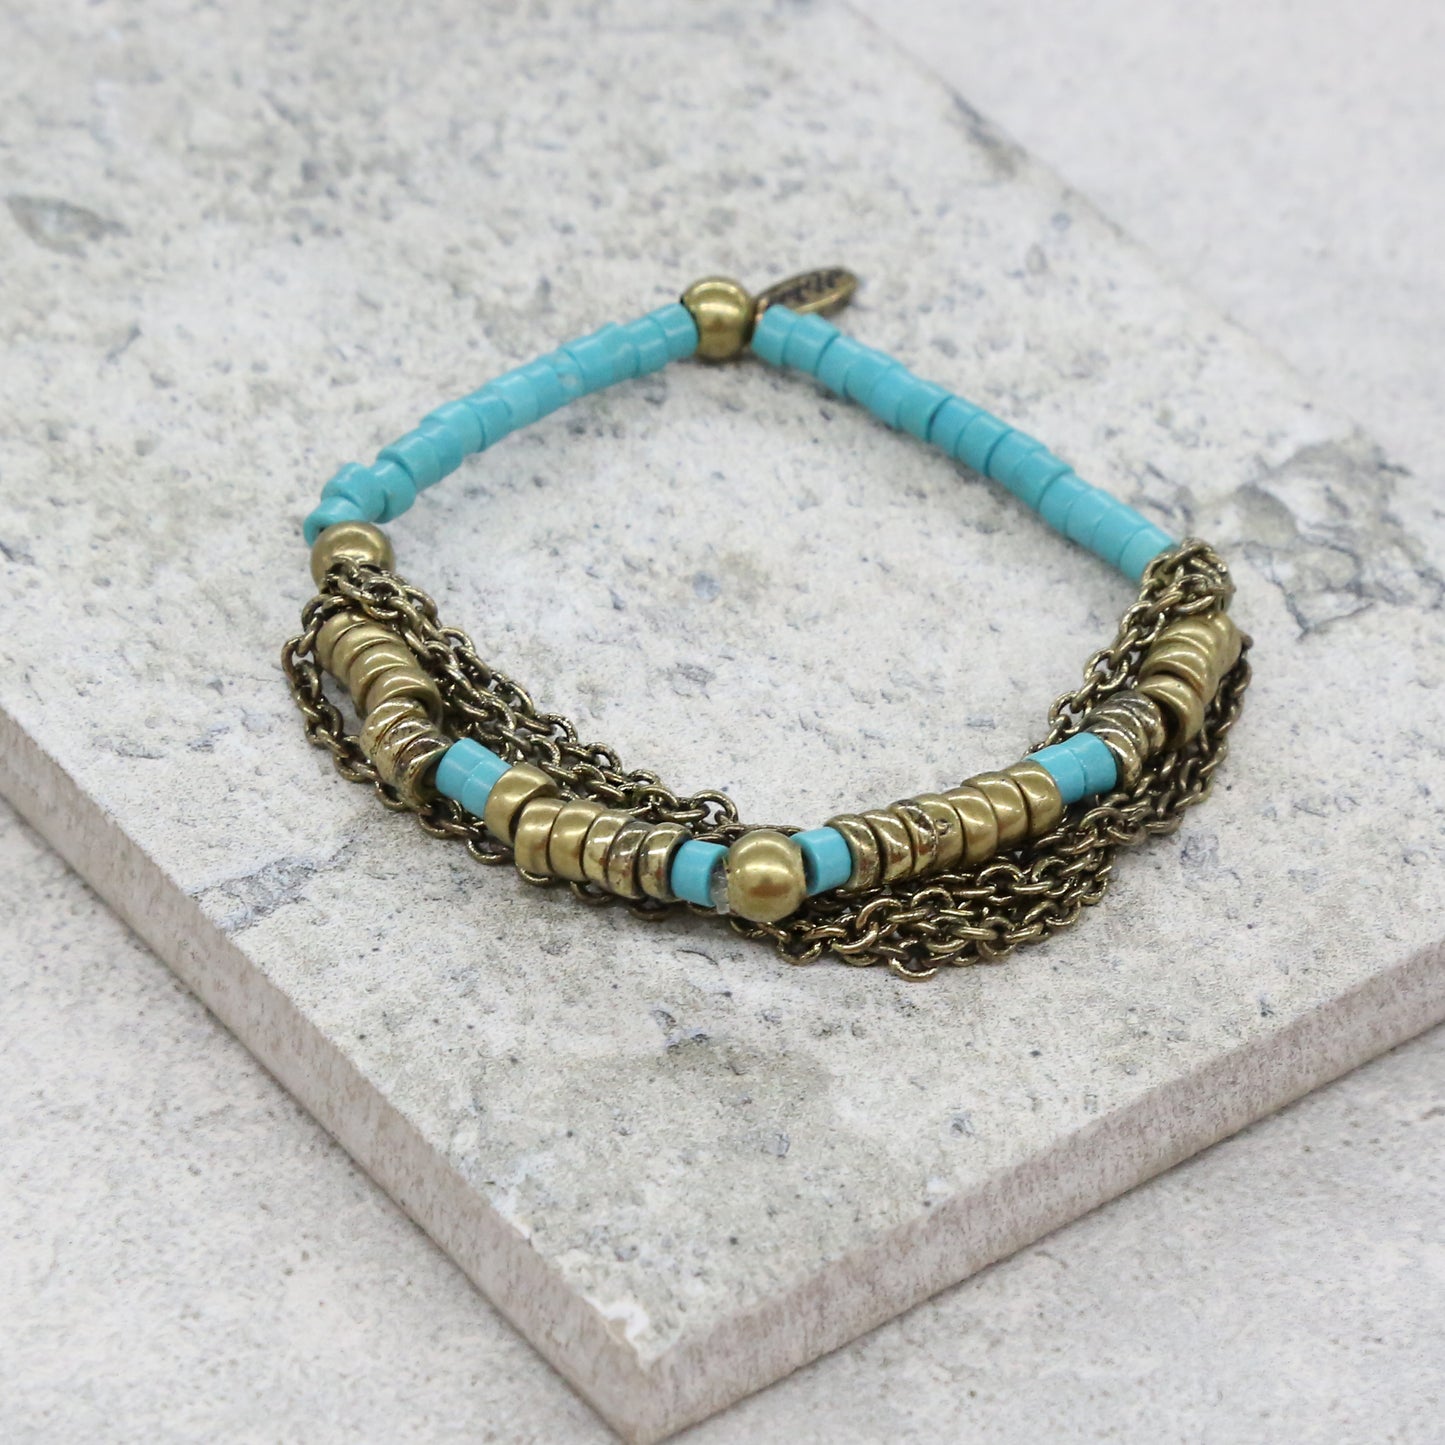 Hadrian Hishi Bracelet in Turquoise and Metal